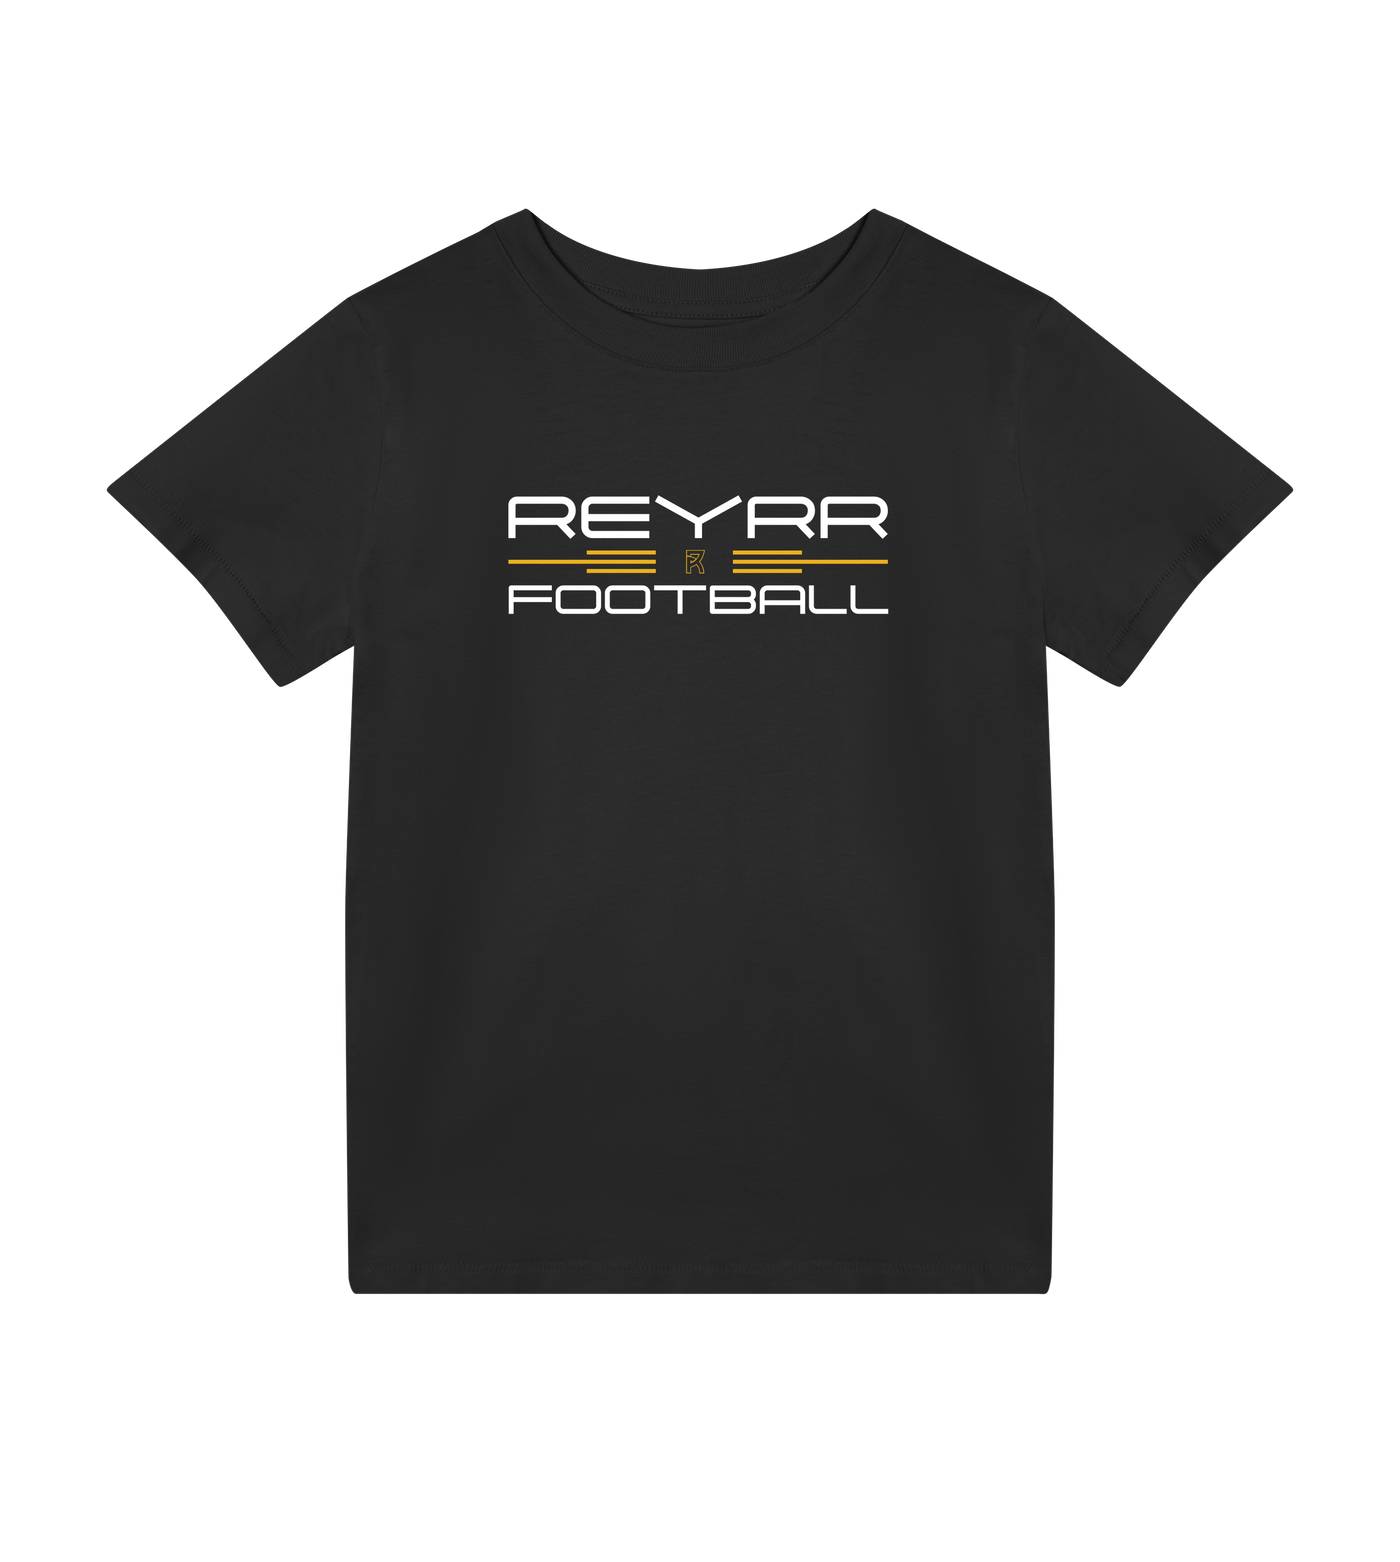 Reyrr Football Kid's T-shirt - Premium t-shirt from REYRR STUDIO - Shop now at Reyrr Athletics